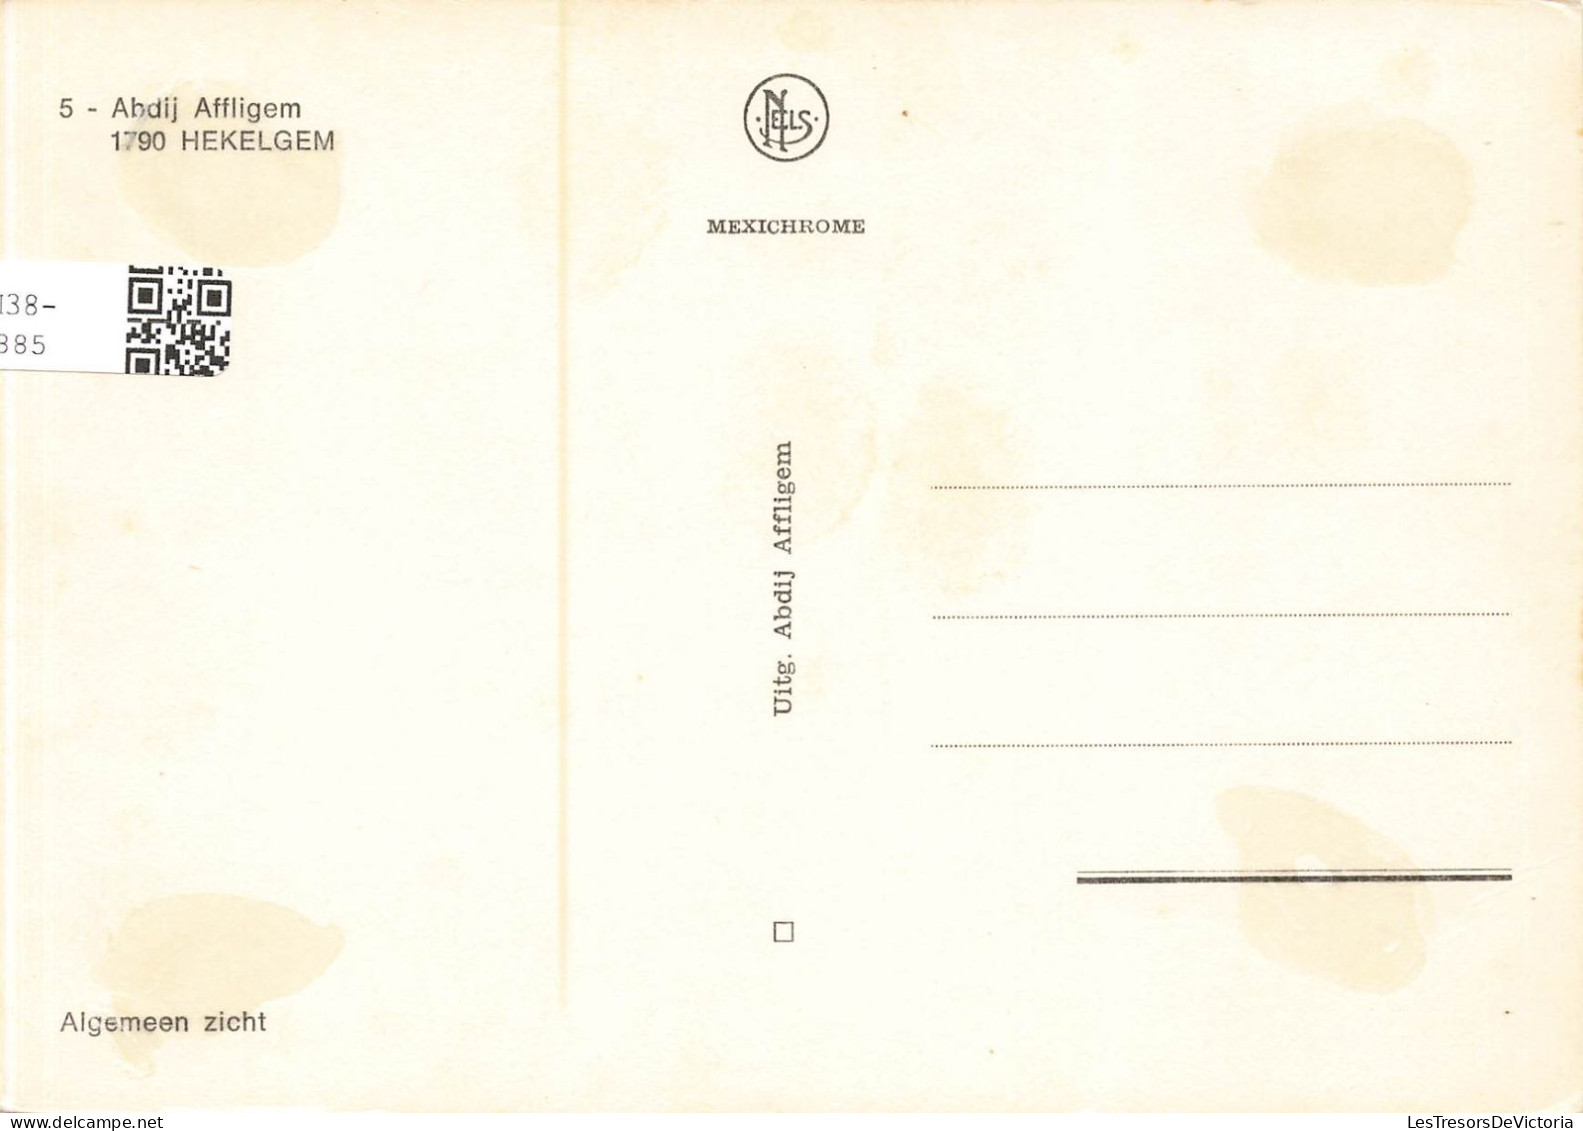 BELGIQUE -  Abdij Affligem 1790 Hekelgem - Vue Générale D'une église - Carte Postale - Affligem